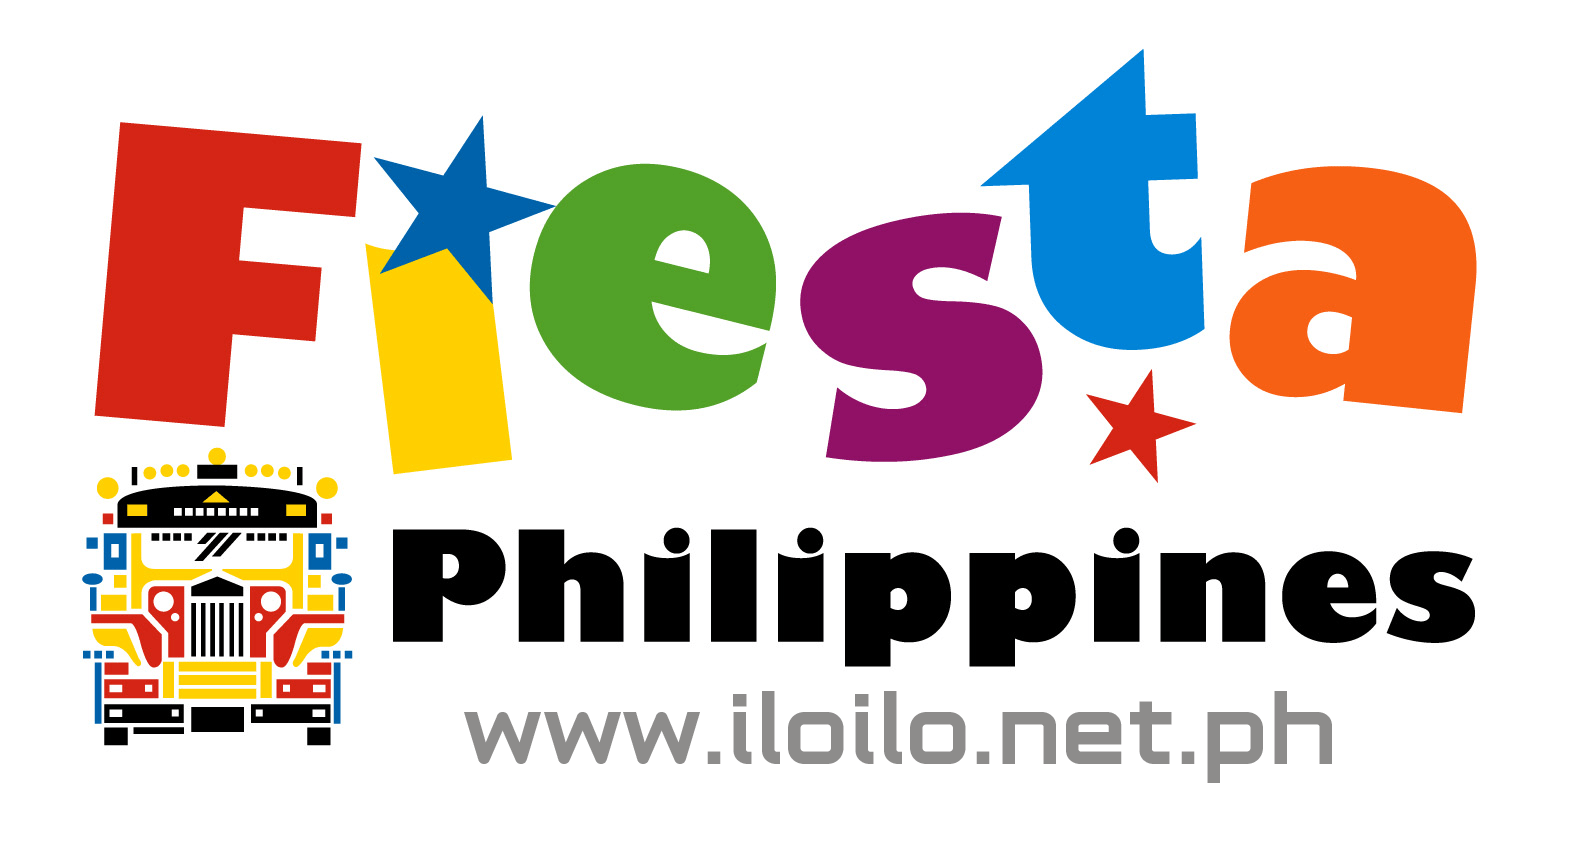 philippine fiesta clipart black and white